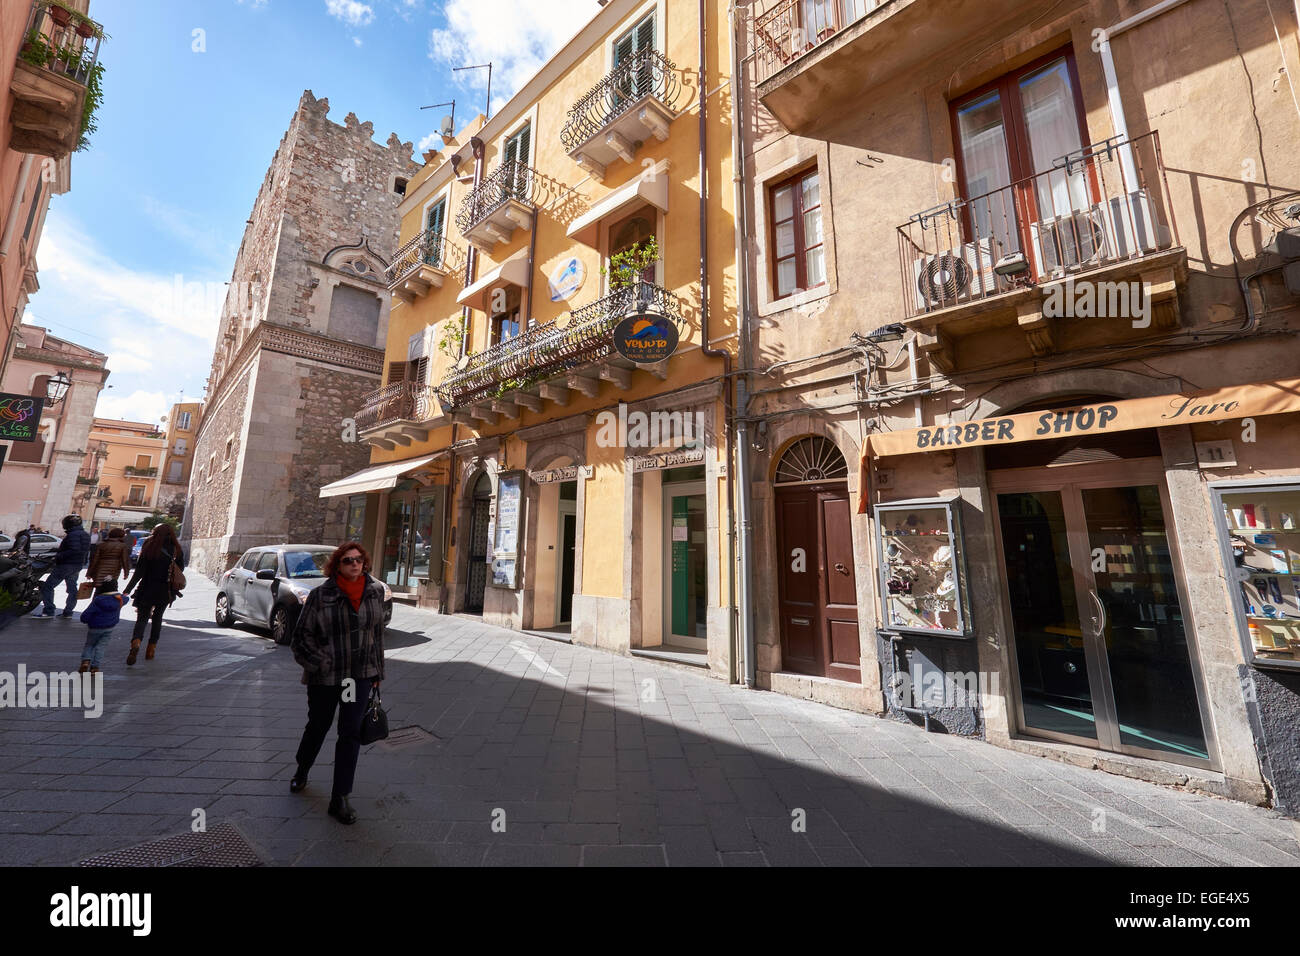 Street scene in Taormina, Sicily, Italy. Italian Tourism, Travel and Holiday Destination. Stock Photo